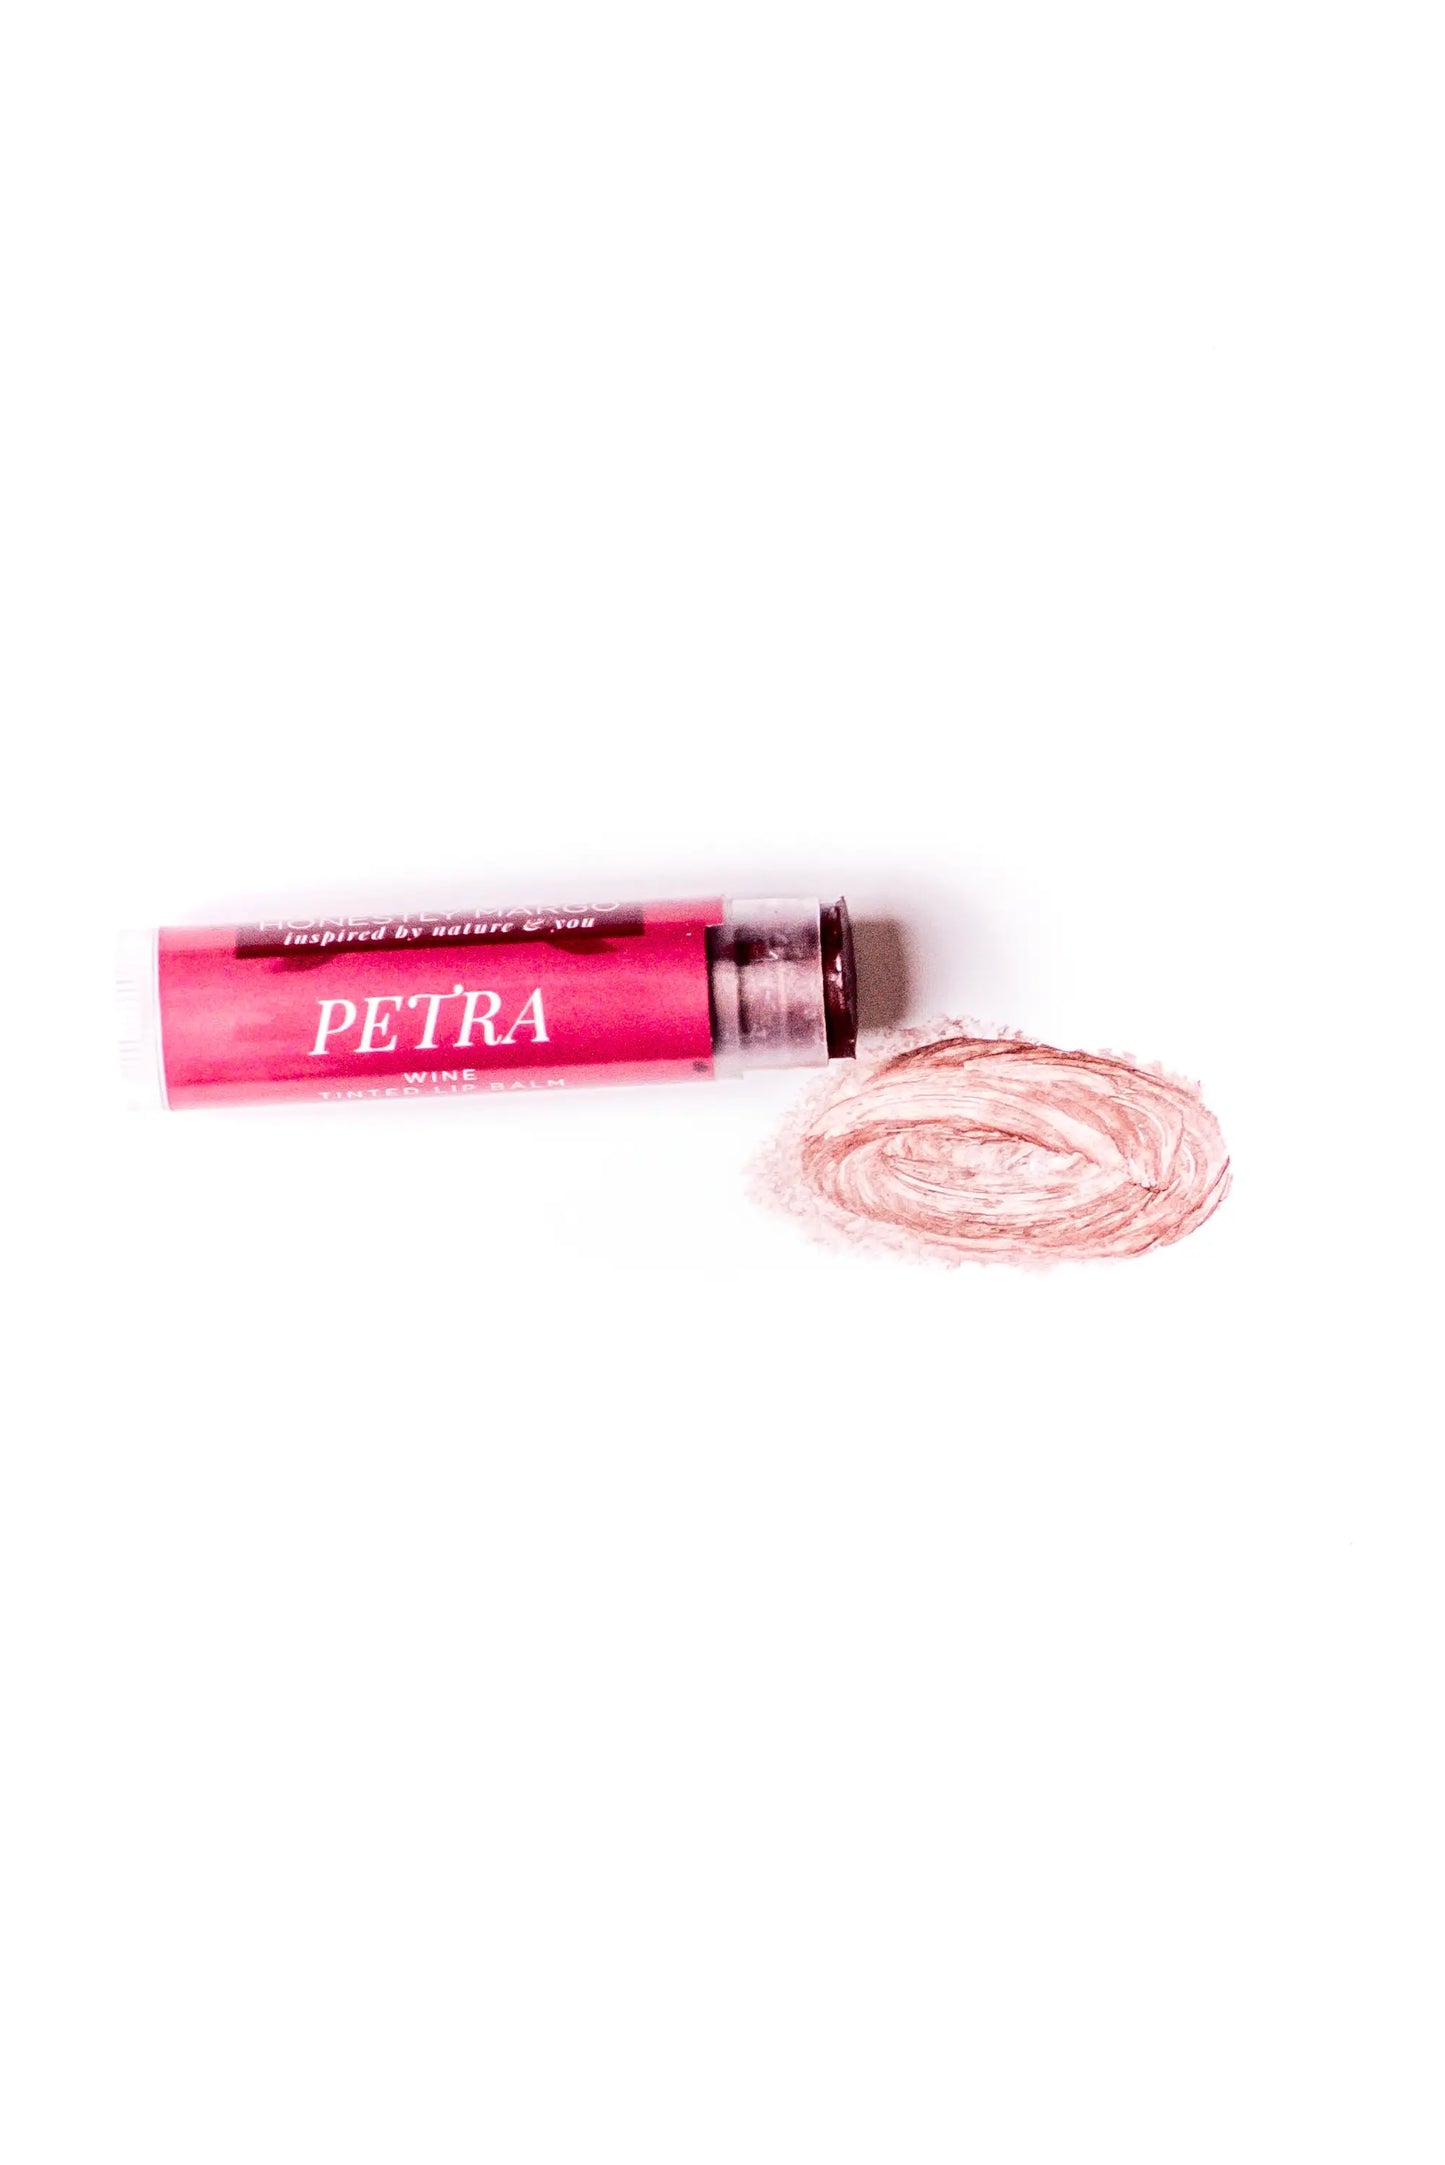 Tinted Lip Balm - Wine Petra